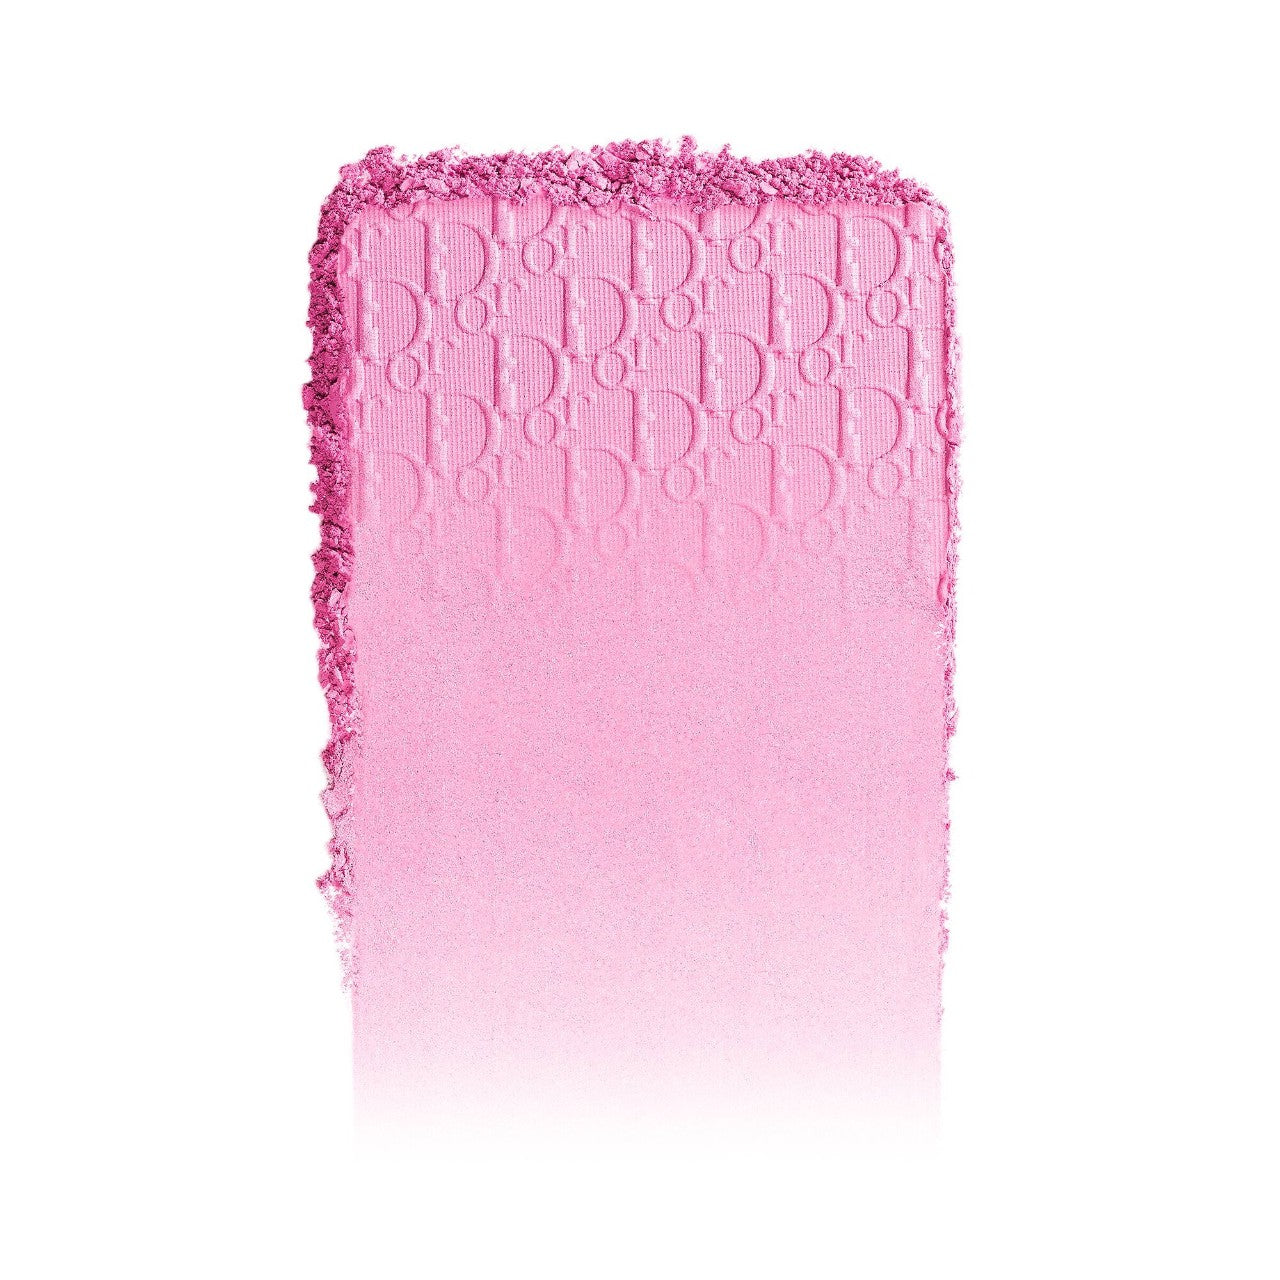 Dior | BACKSTAGE Rosy Glow Blush | 001 Pink